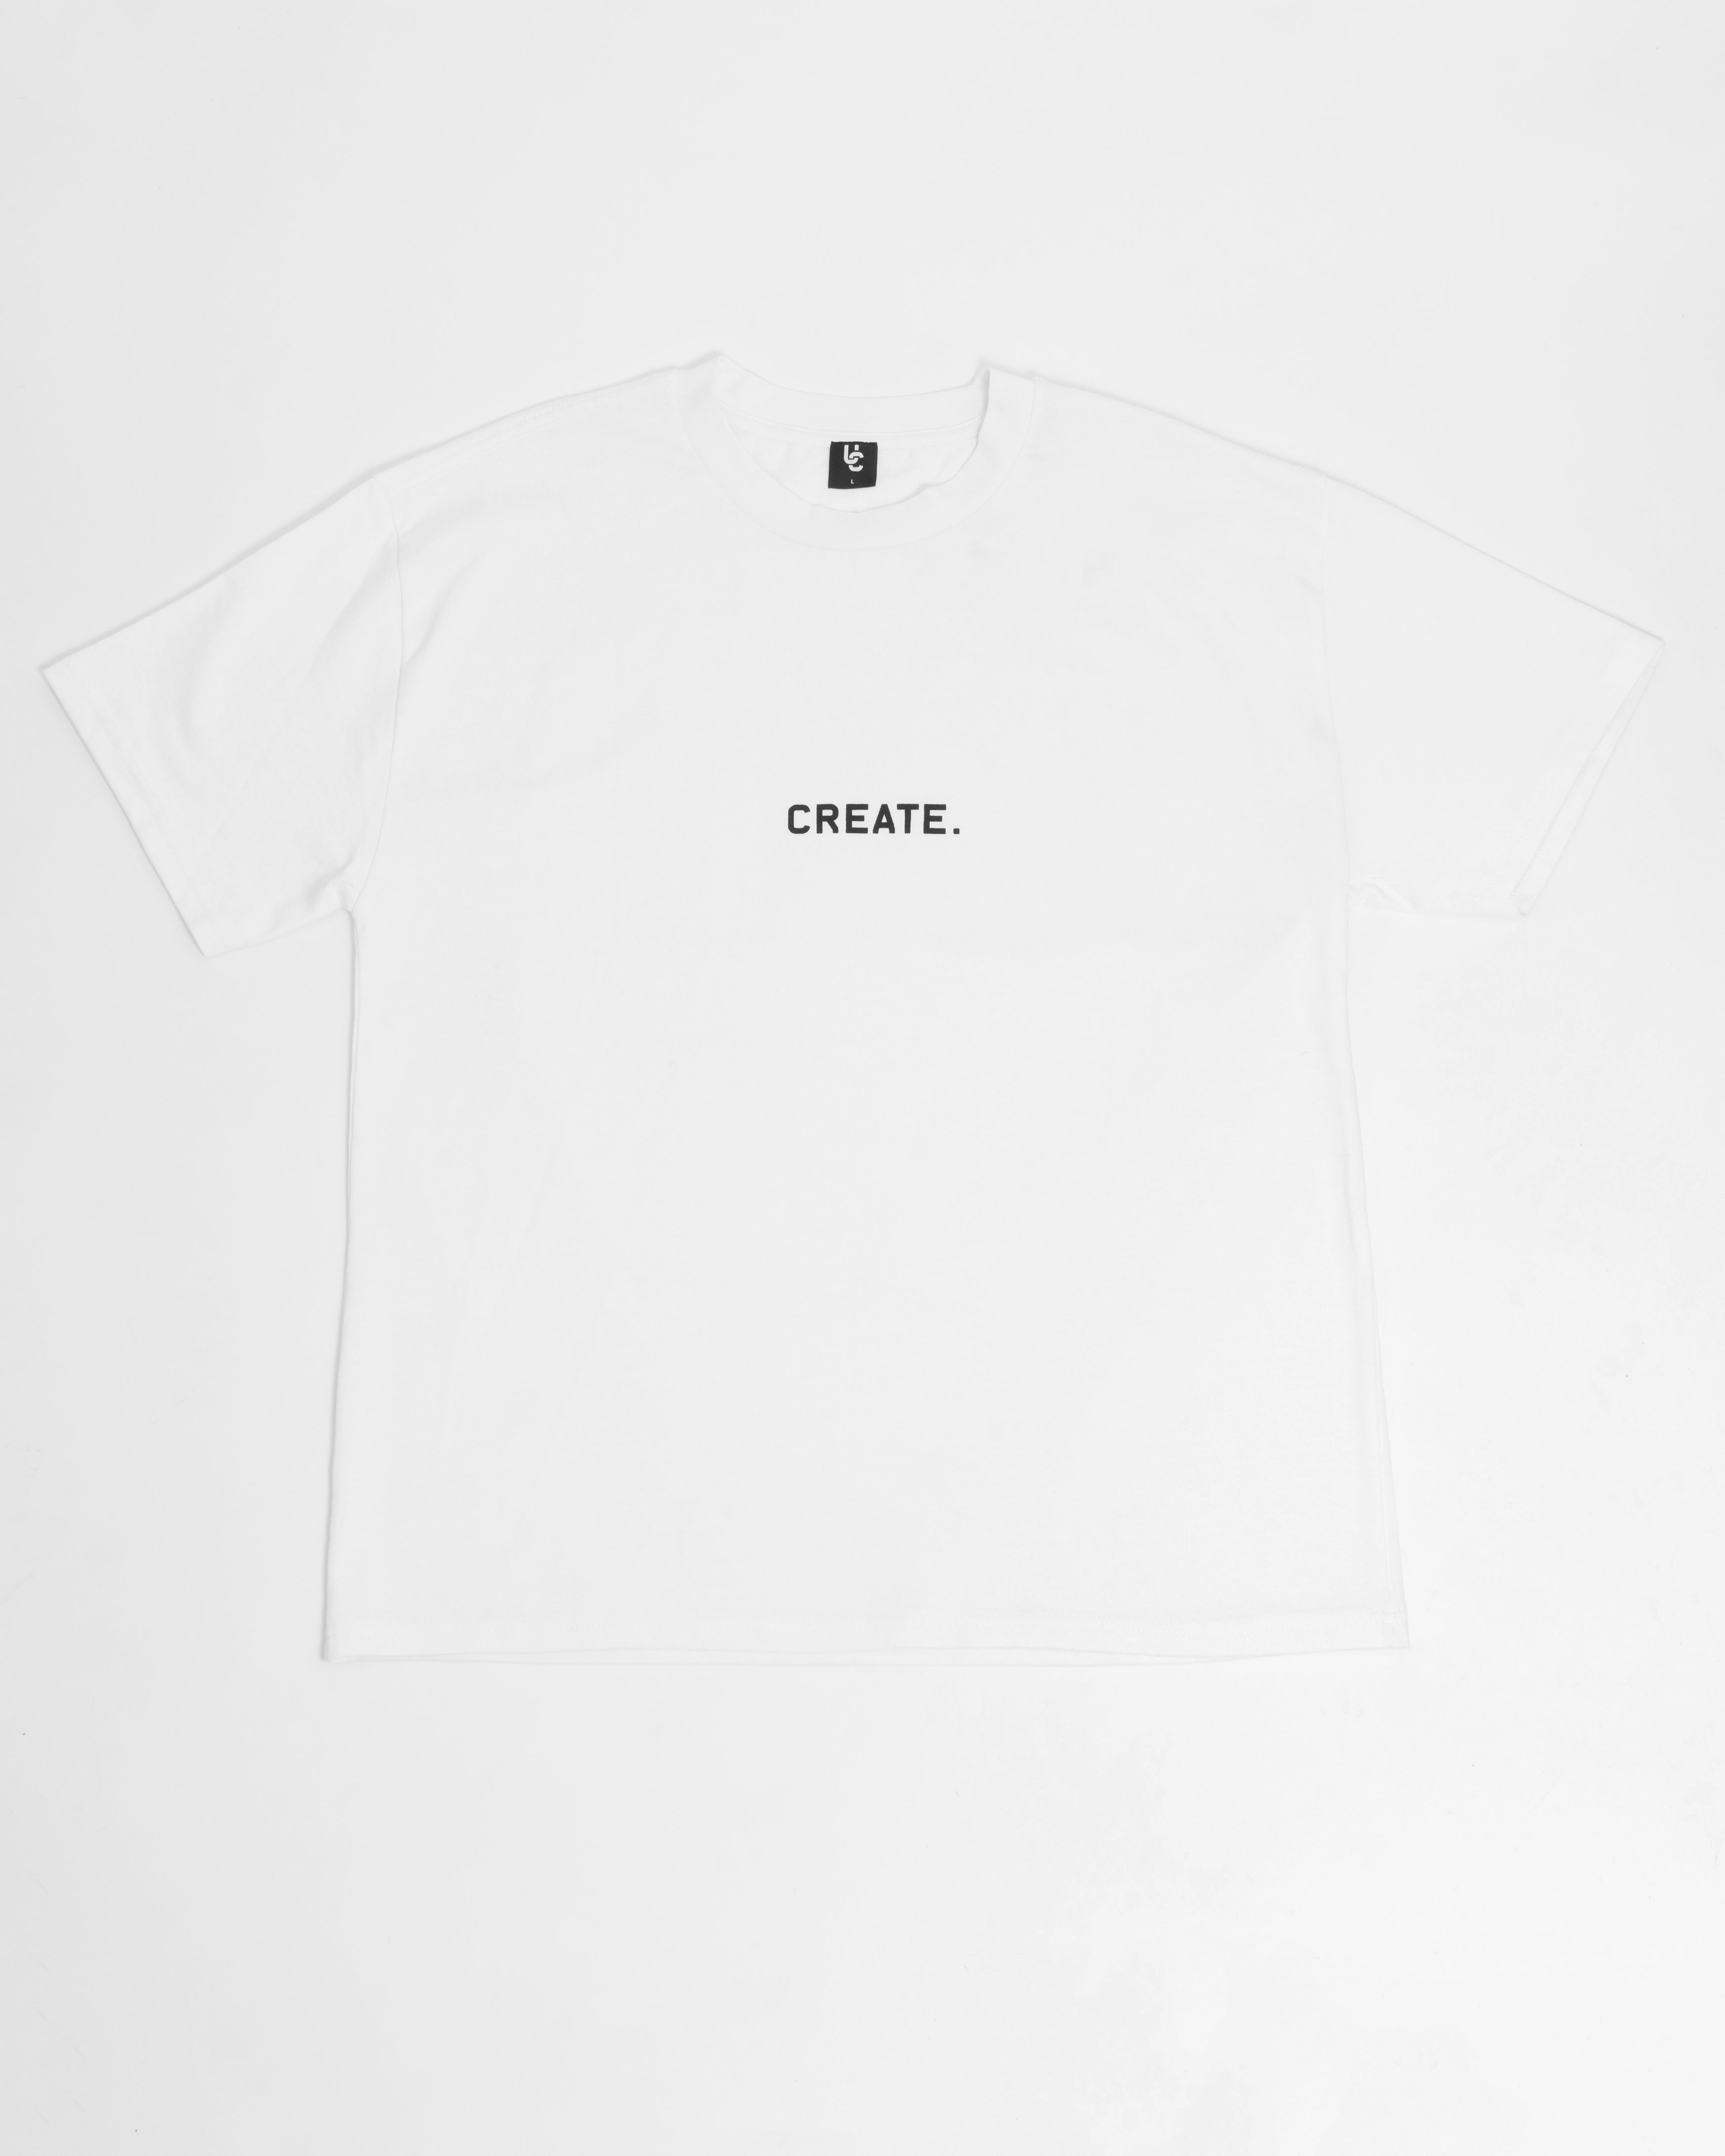 Oversized CREATE. T-Shirt - White